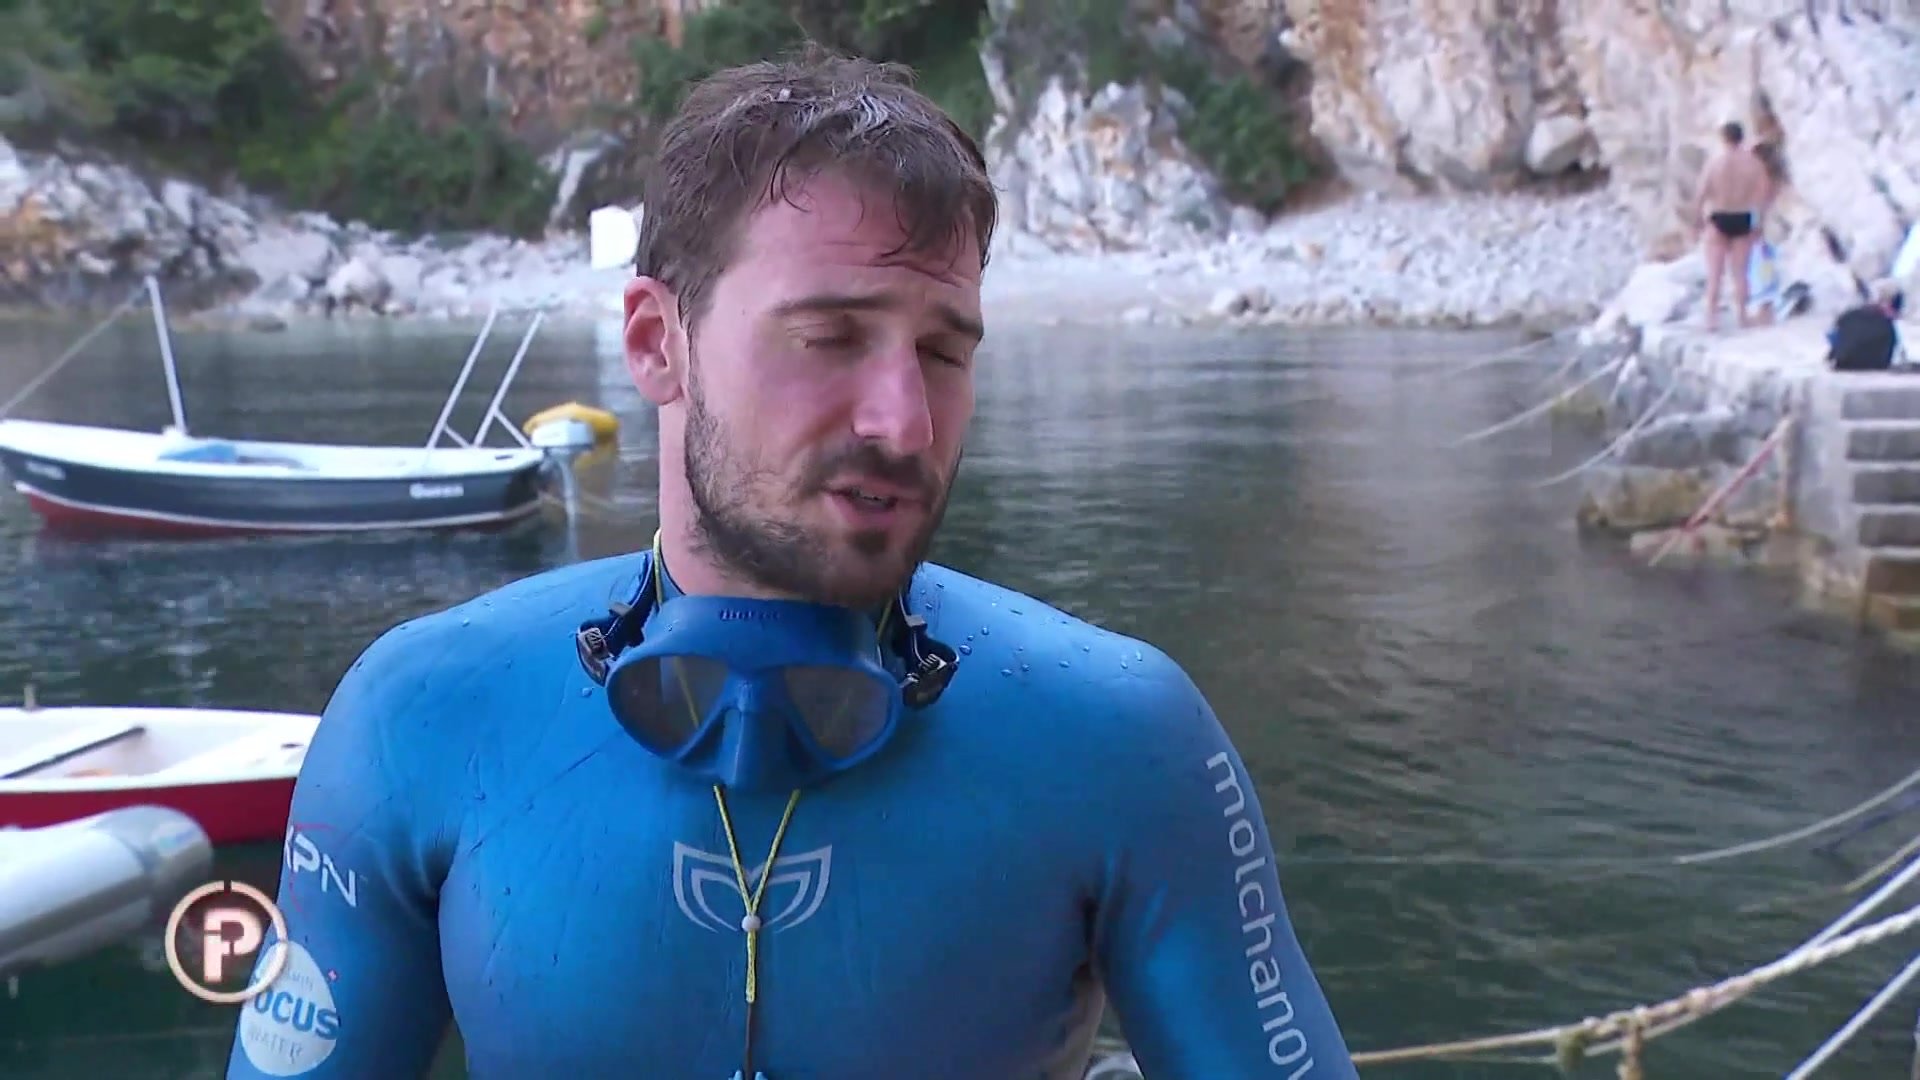 Freediver hottie barefaced underwater in wetsuit